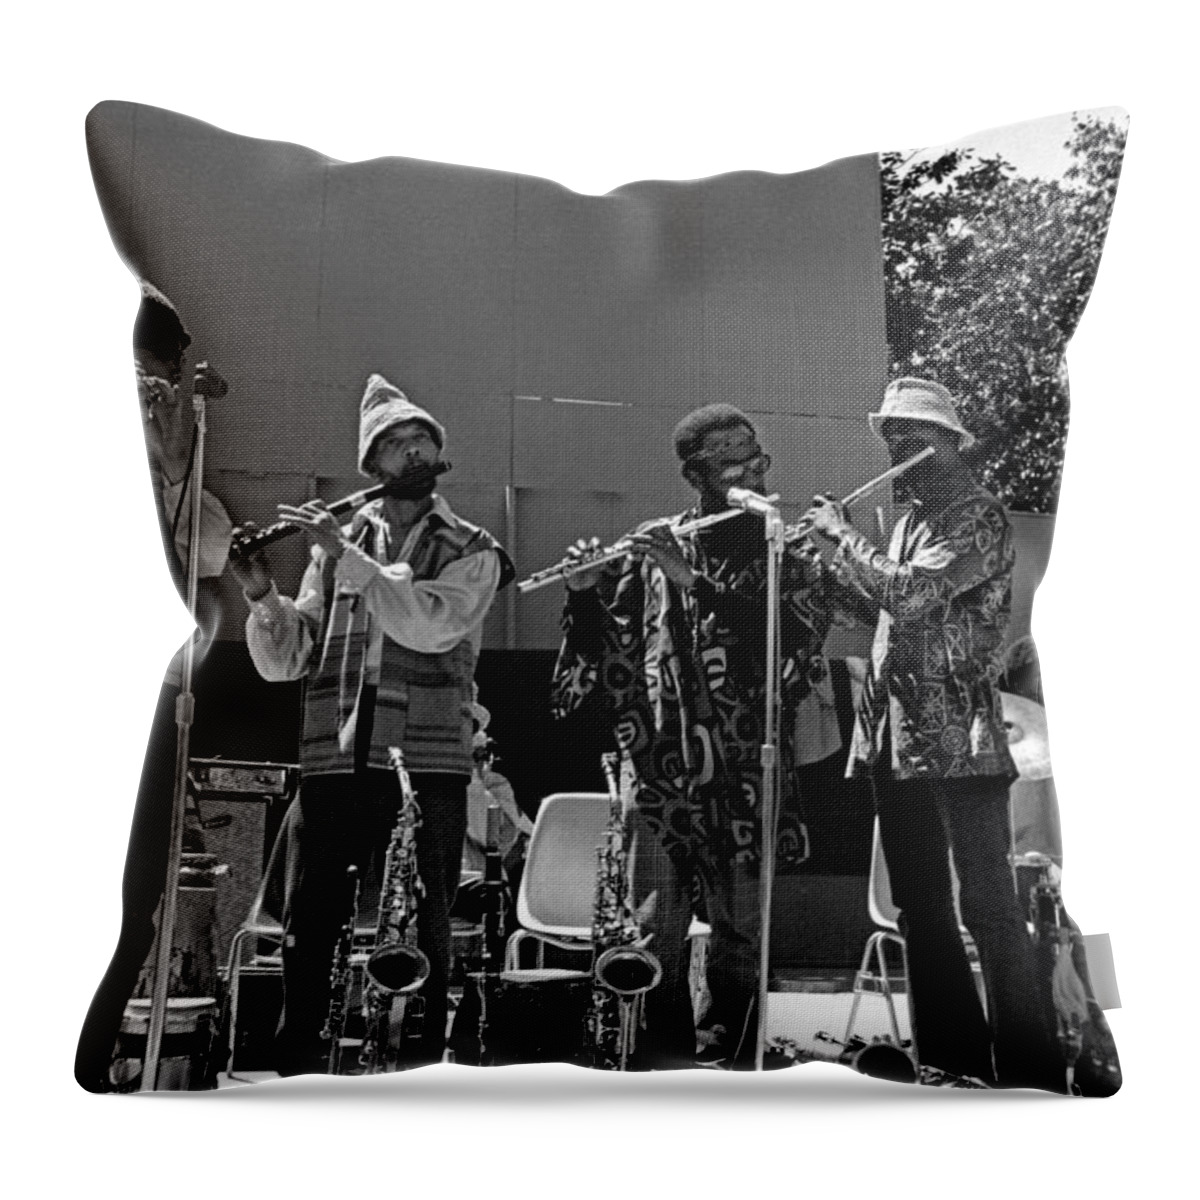 Sun Ra Arkestra Throw Pillow featuring the photograph Four Flutes 2 by Lee Santa